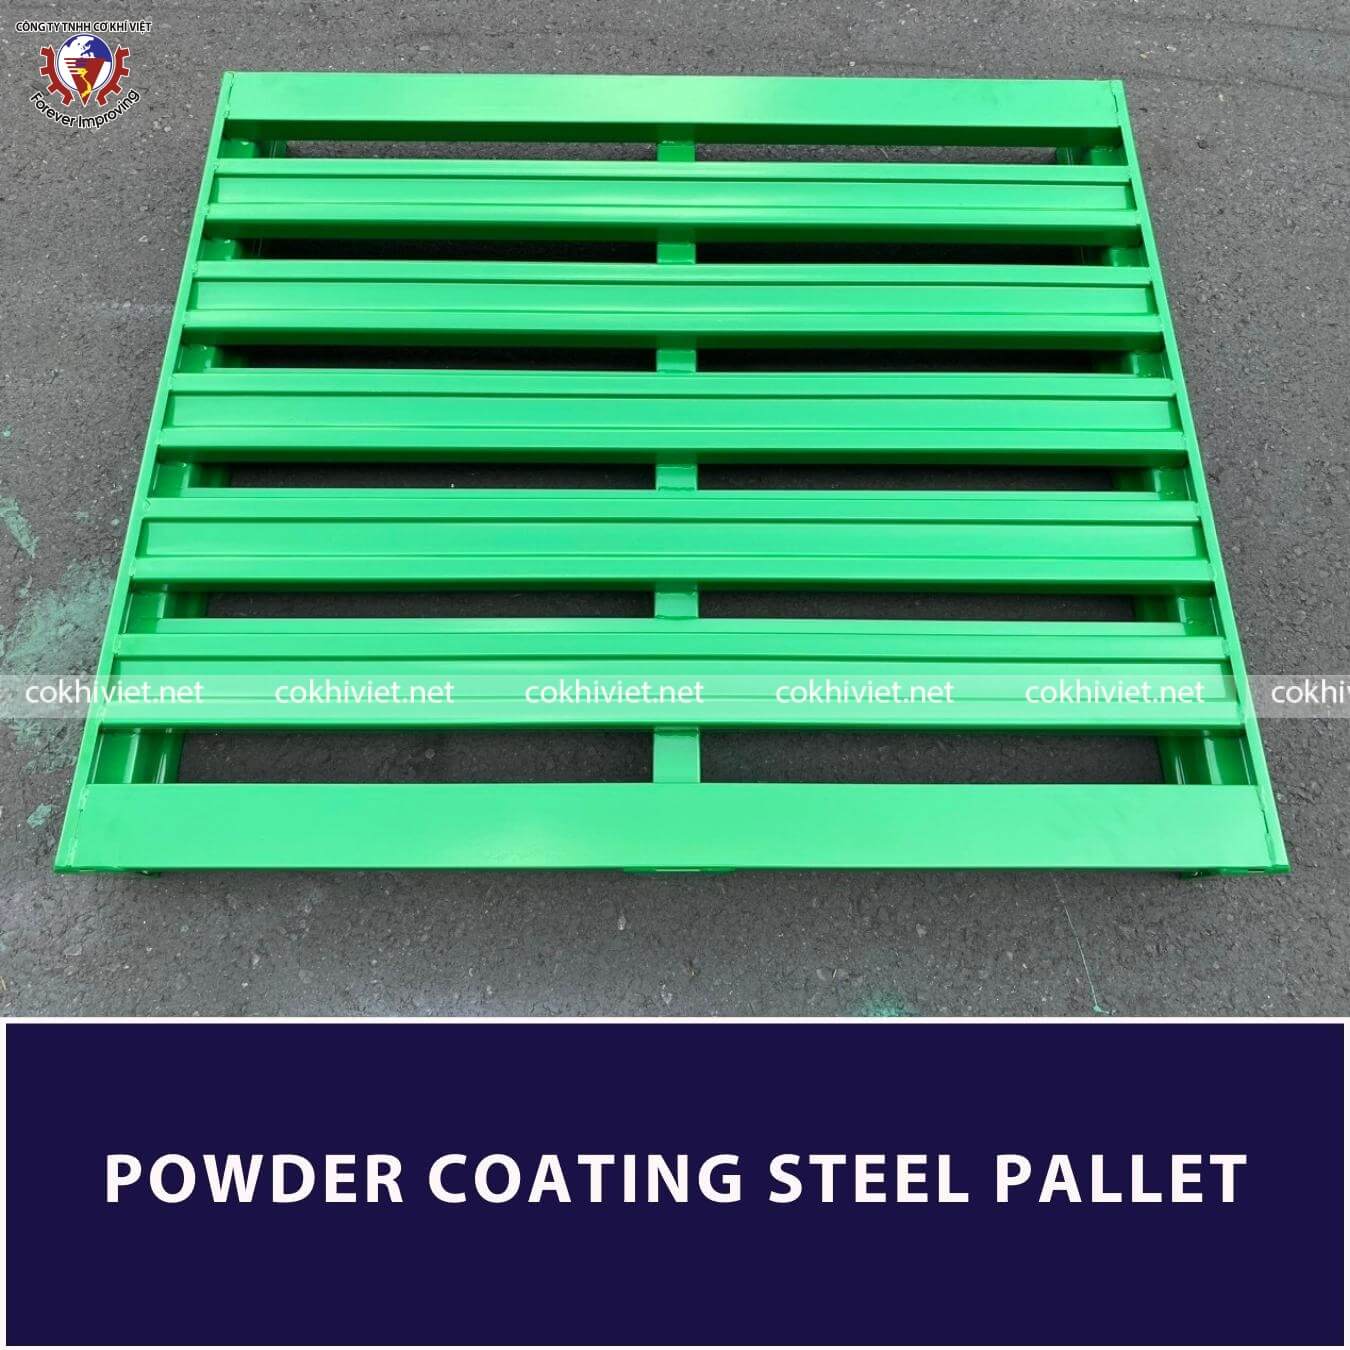 powder coating steel pallet_